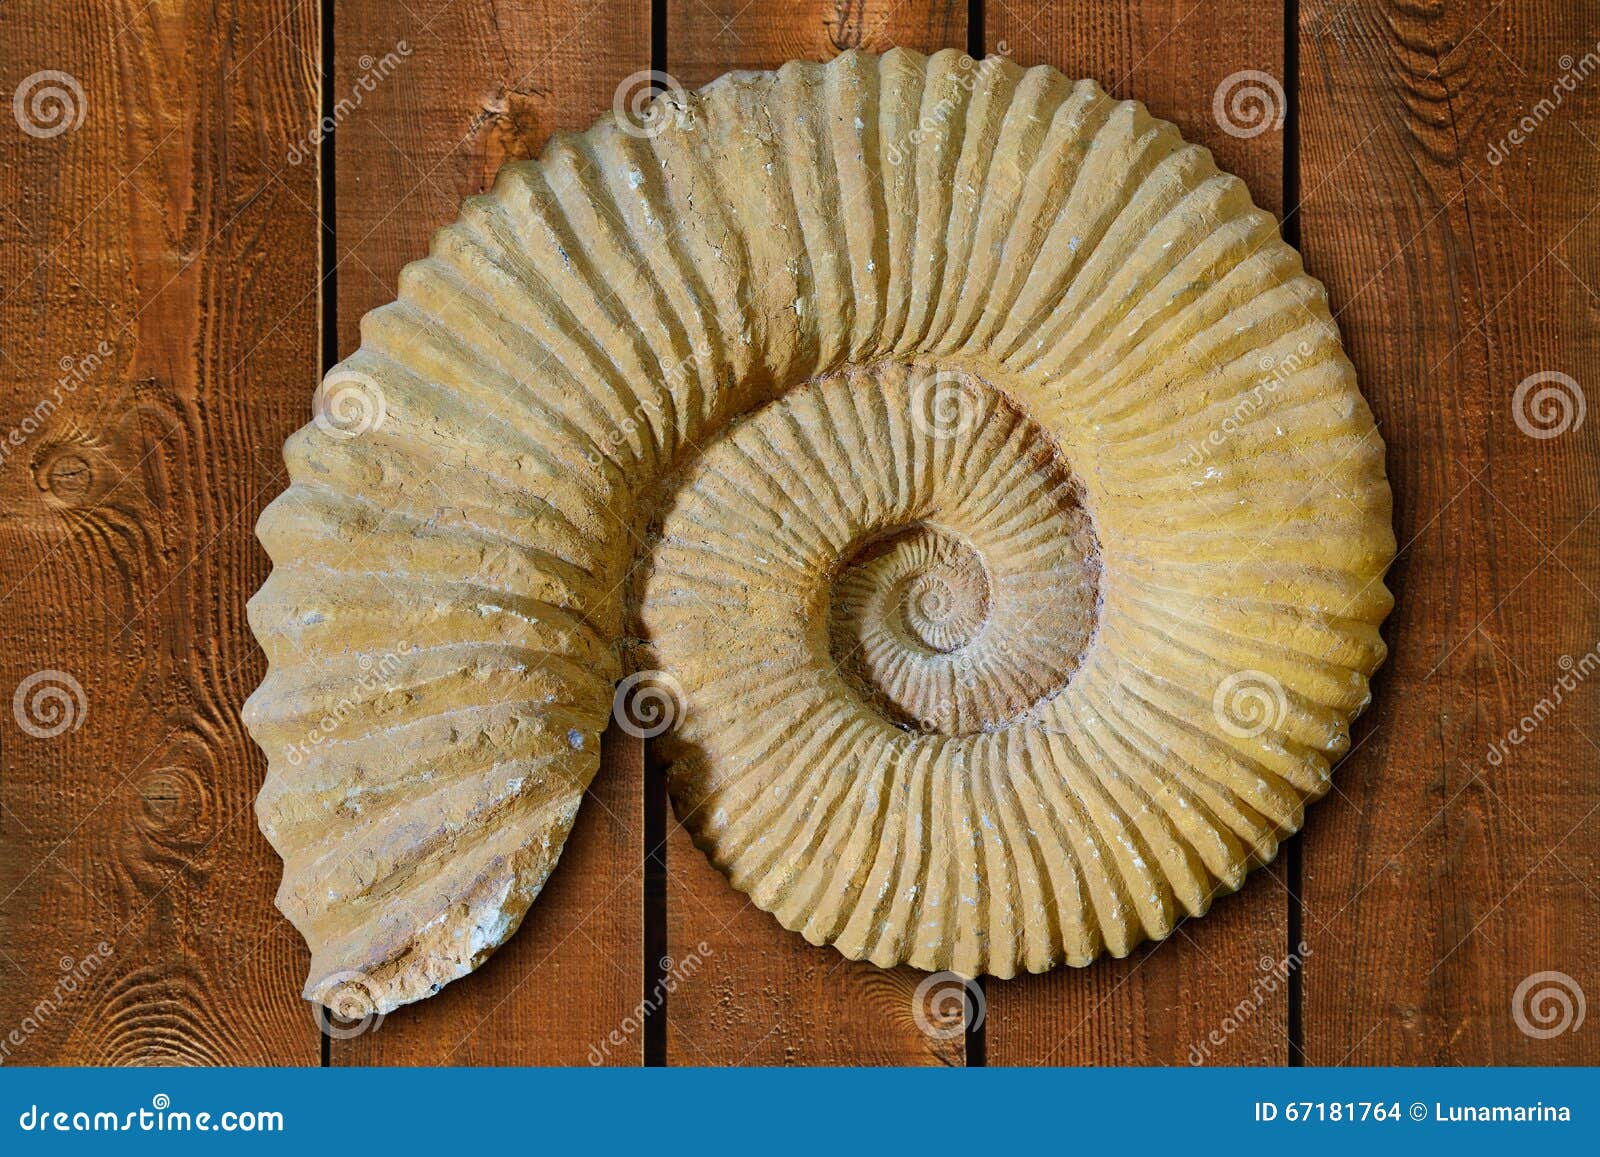 ammonites fossil in valencian community spain